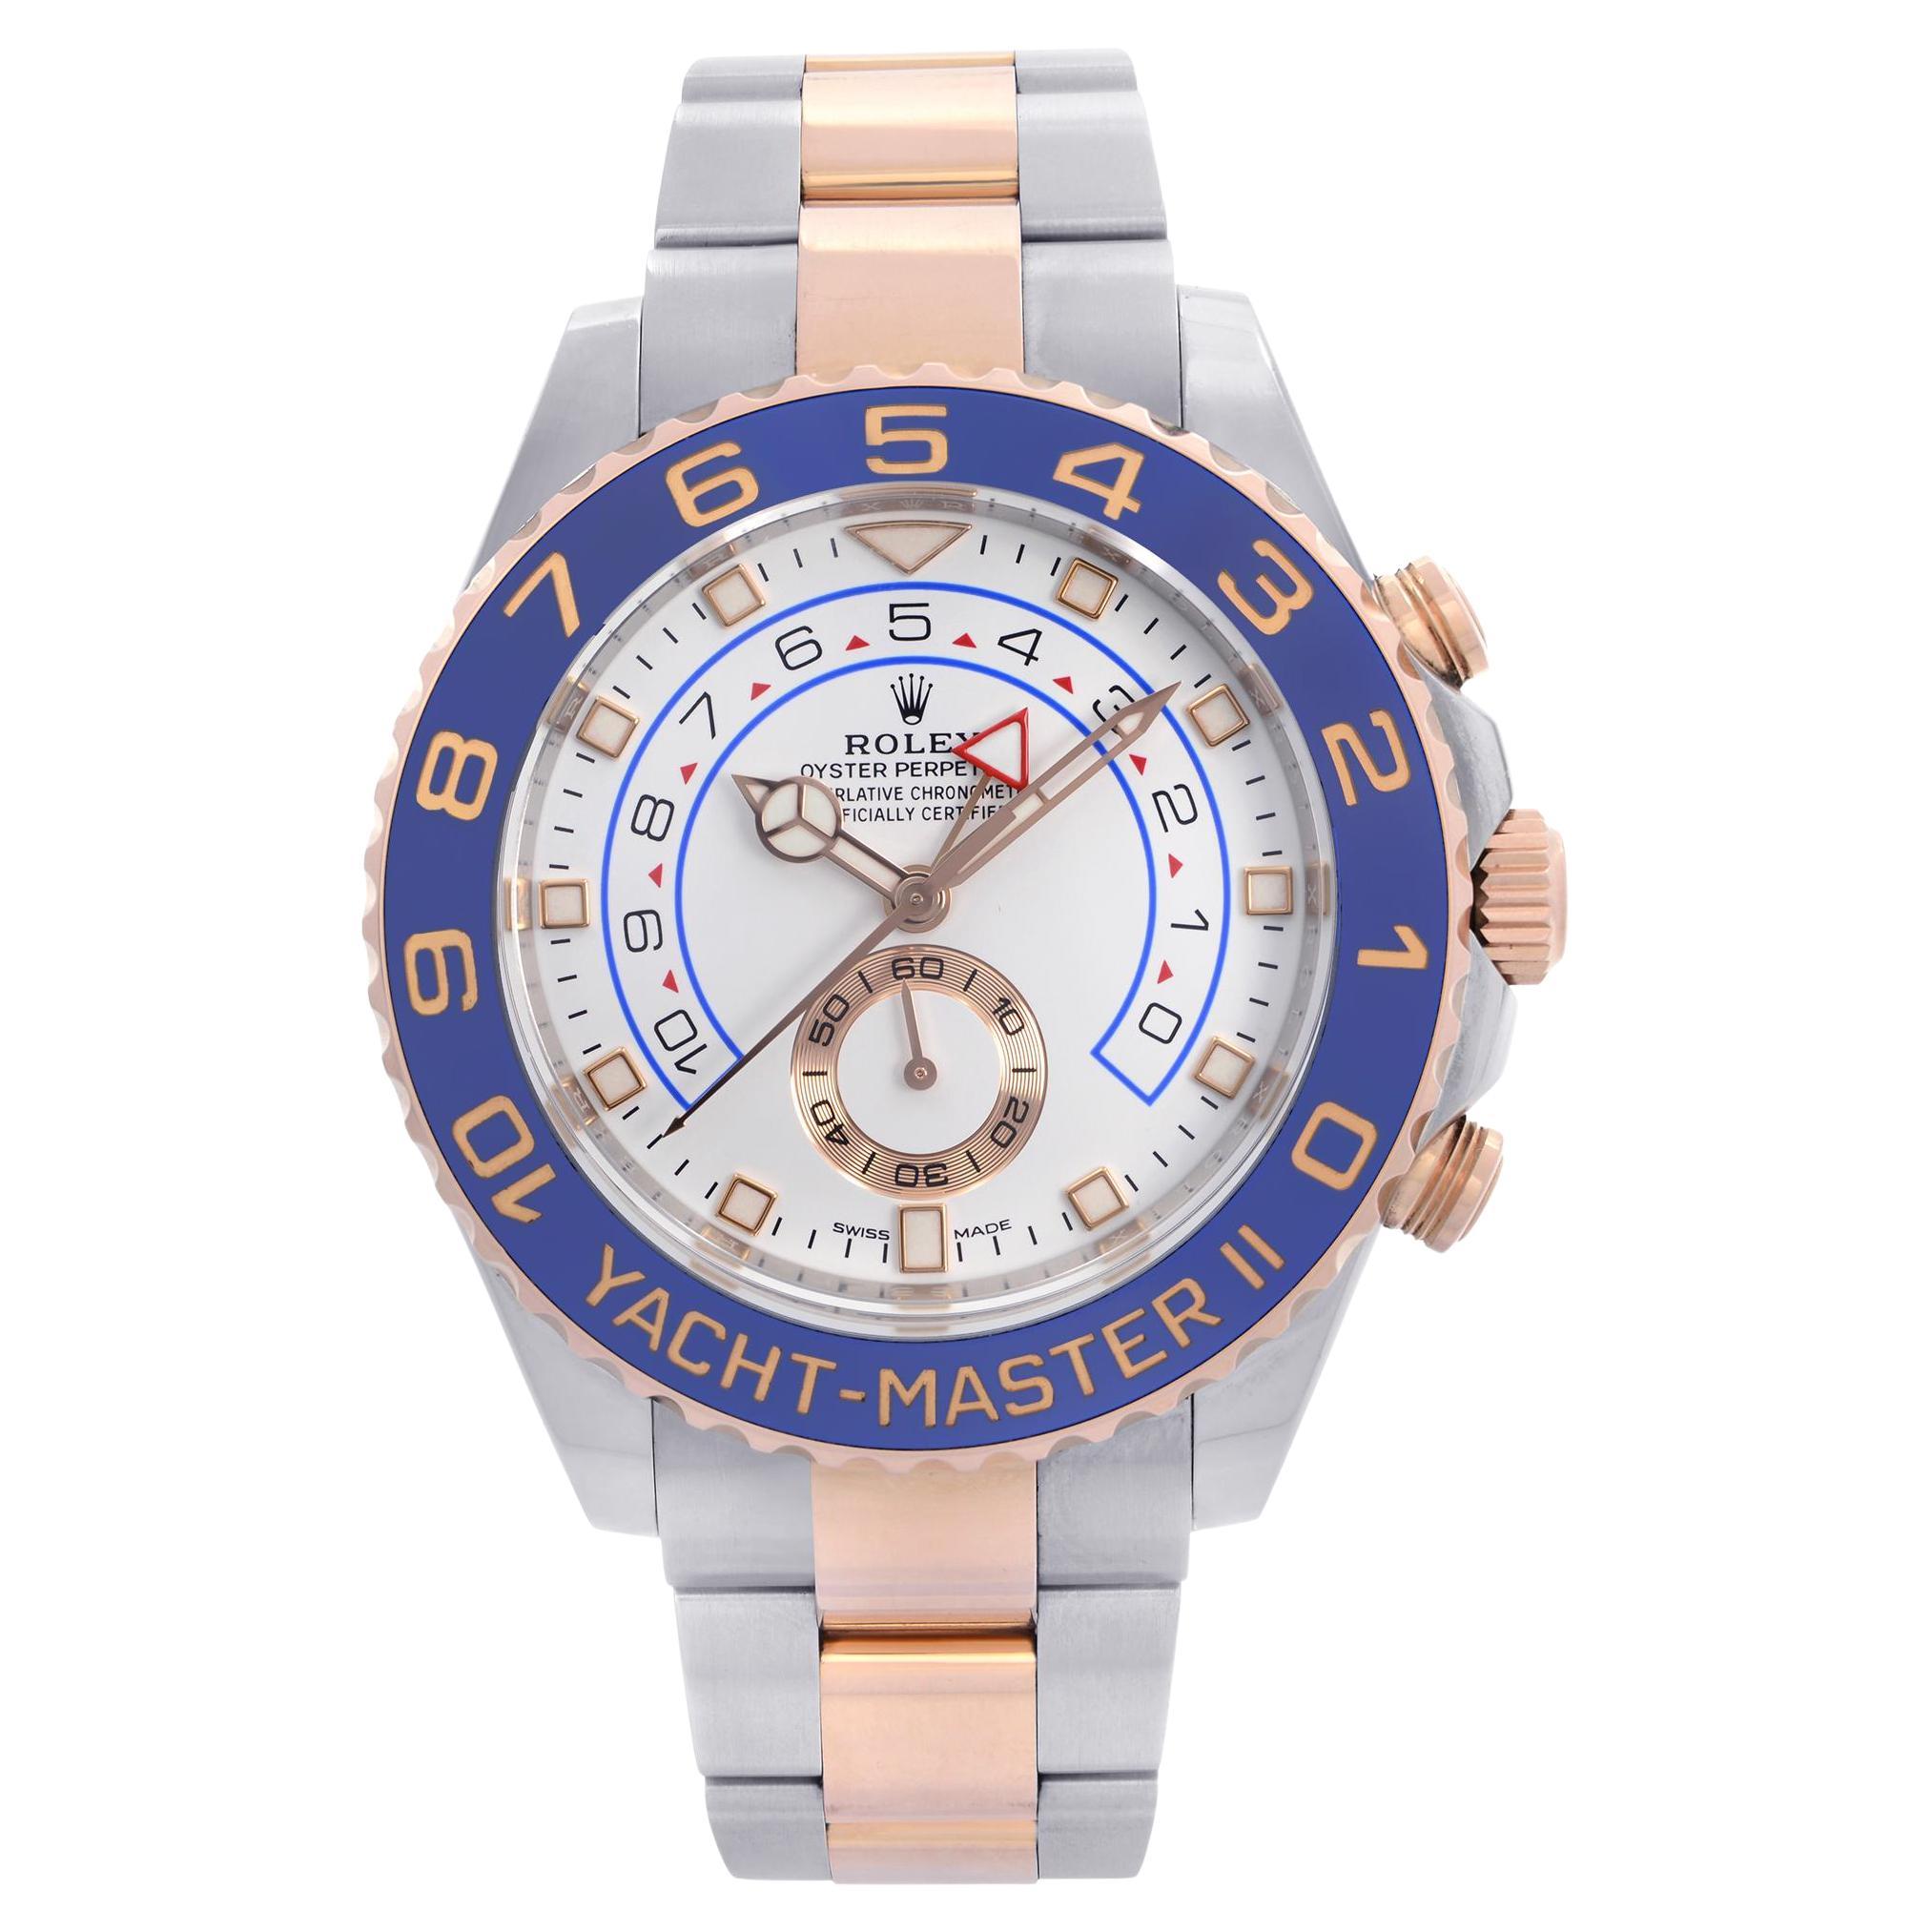 Rolex Yacht-Master II Steel 18k Rose Gold White Dial Mercedes Hands Watch 116681